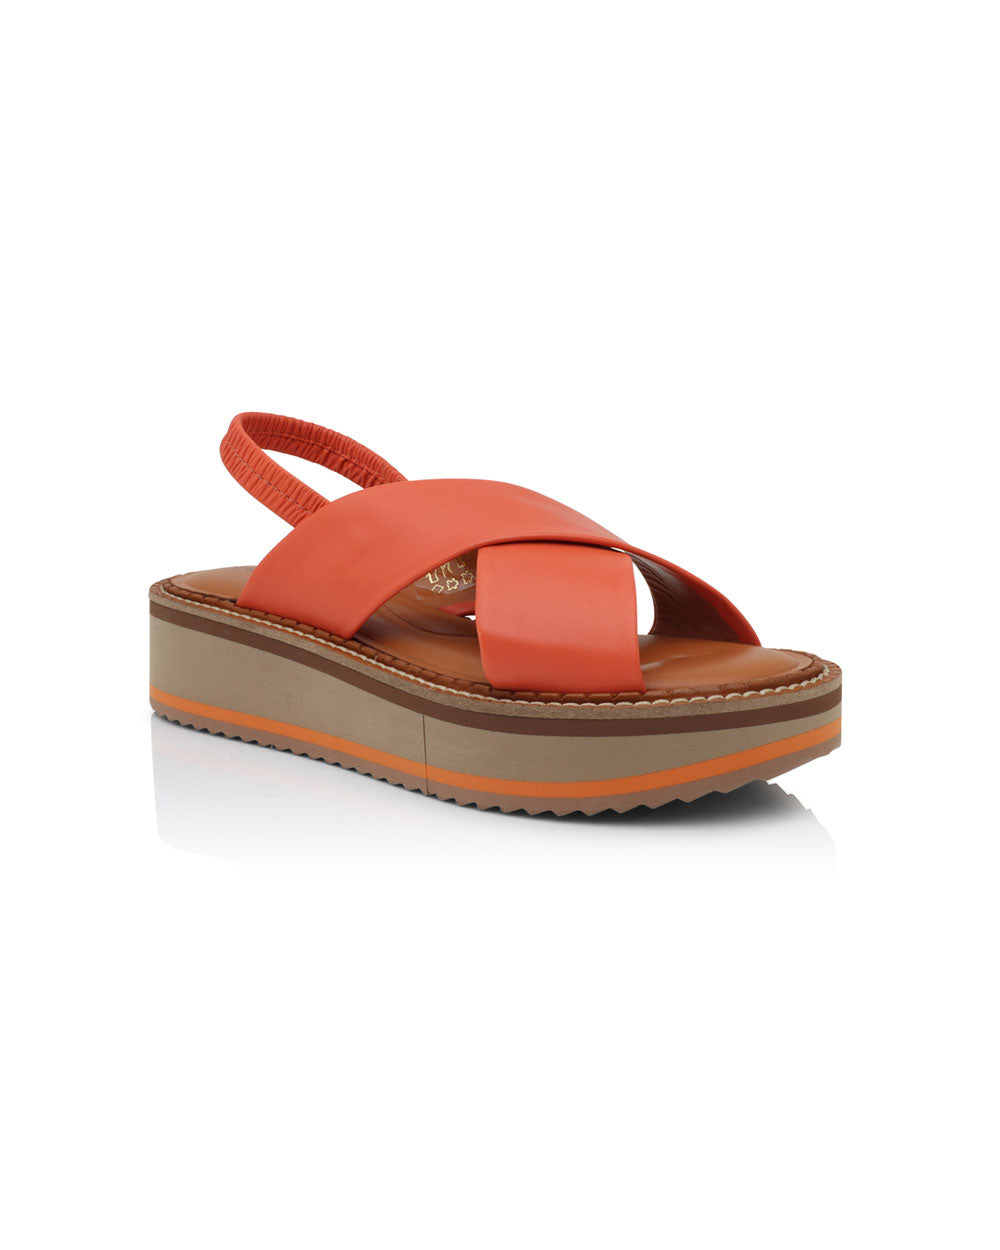 Freedom Sandal With Heel Strap in Papaya